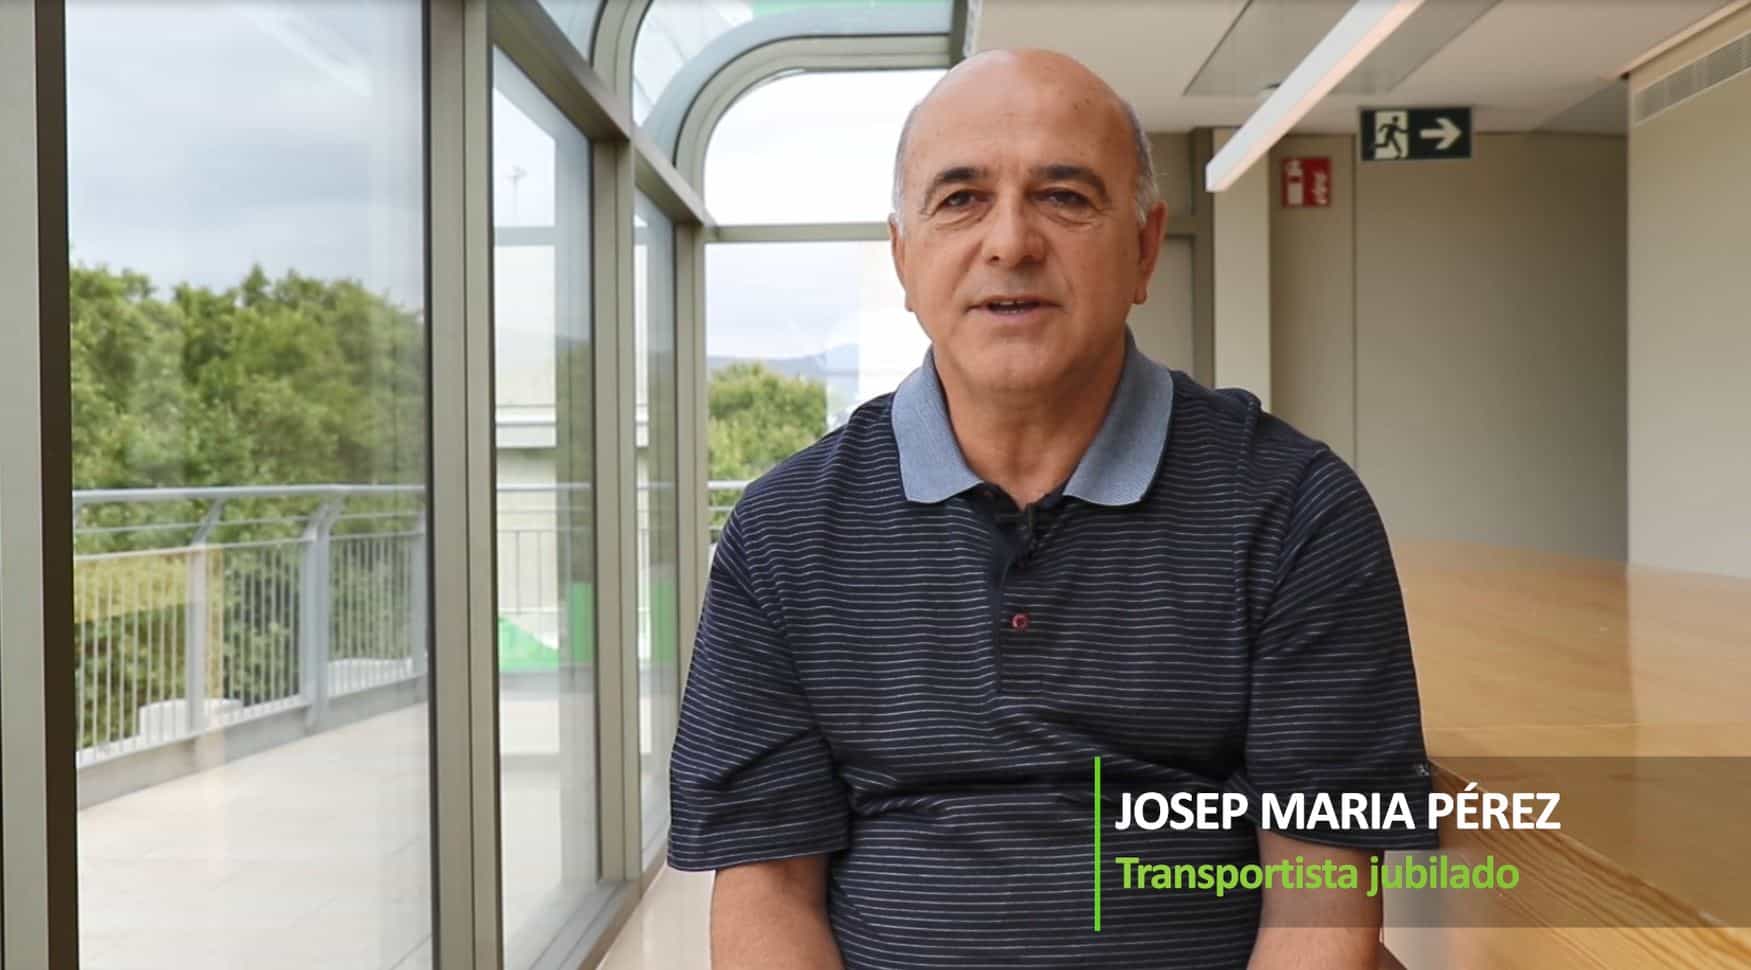 Josep Maria Pérez